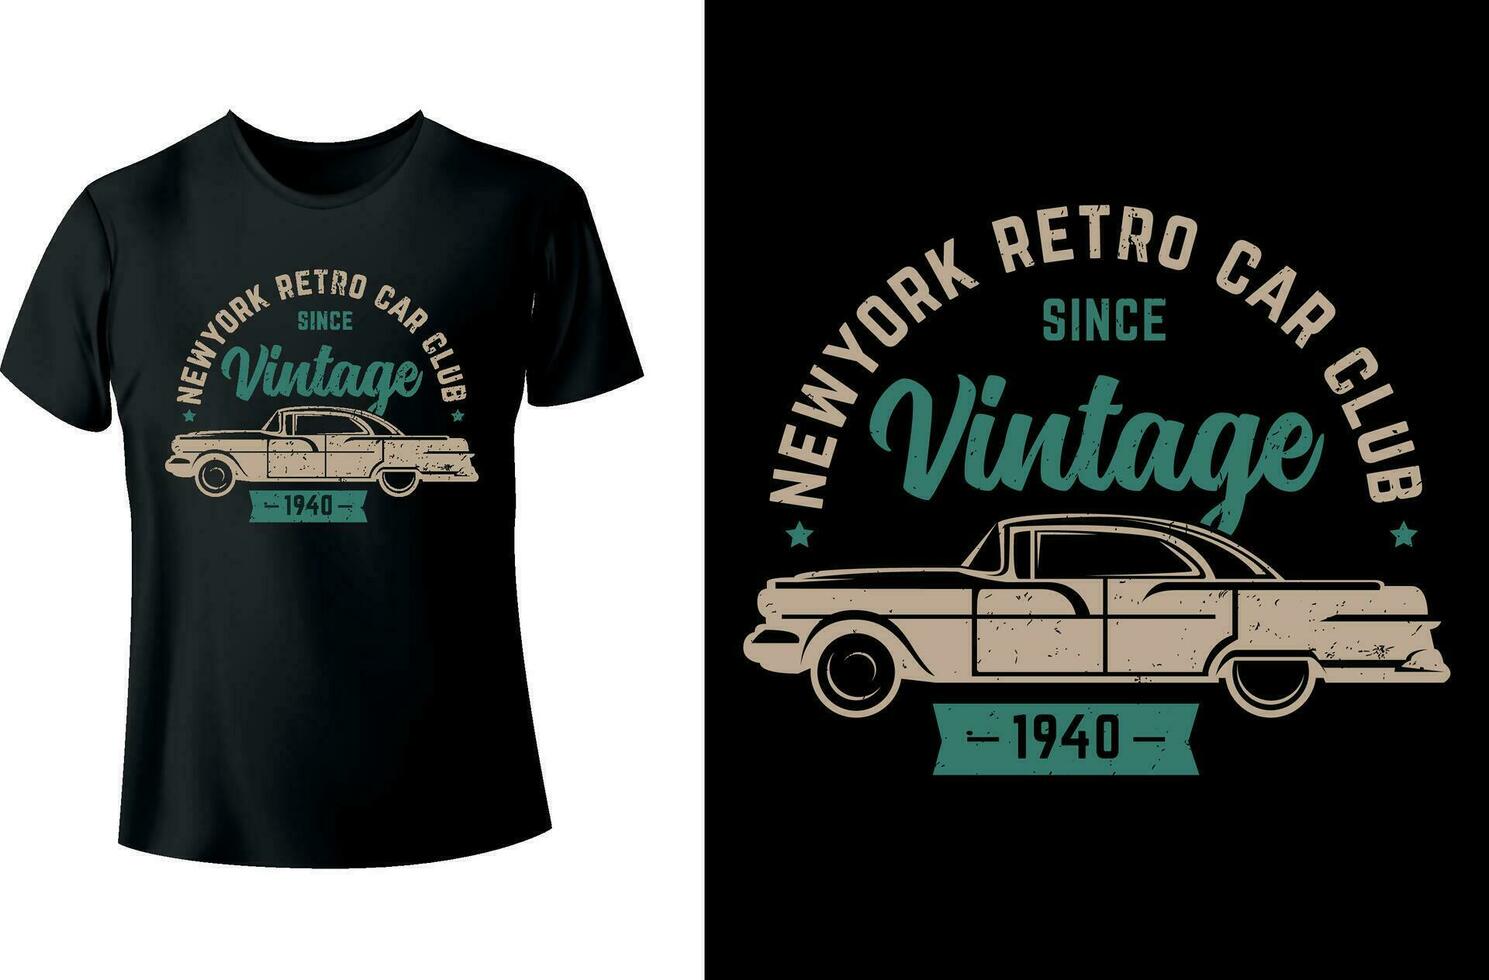 Newyork retro car club vintage tshirt design vector